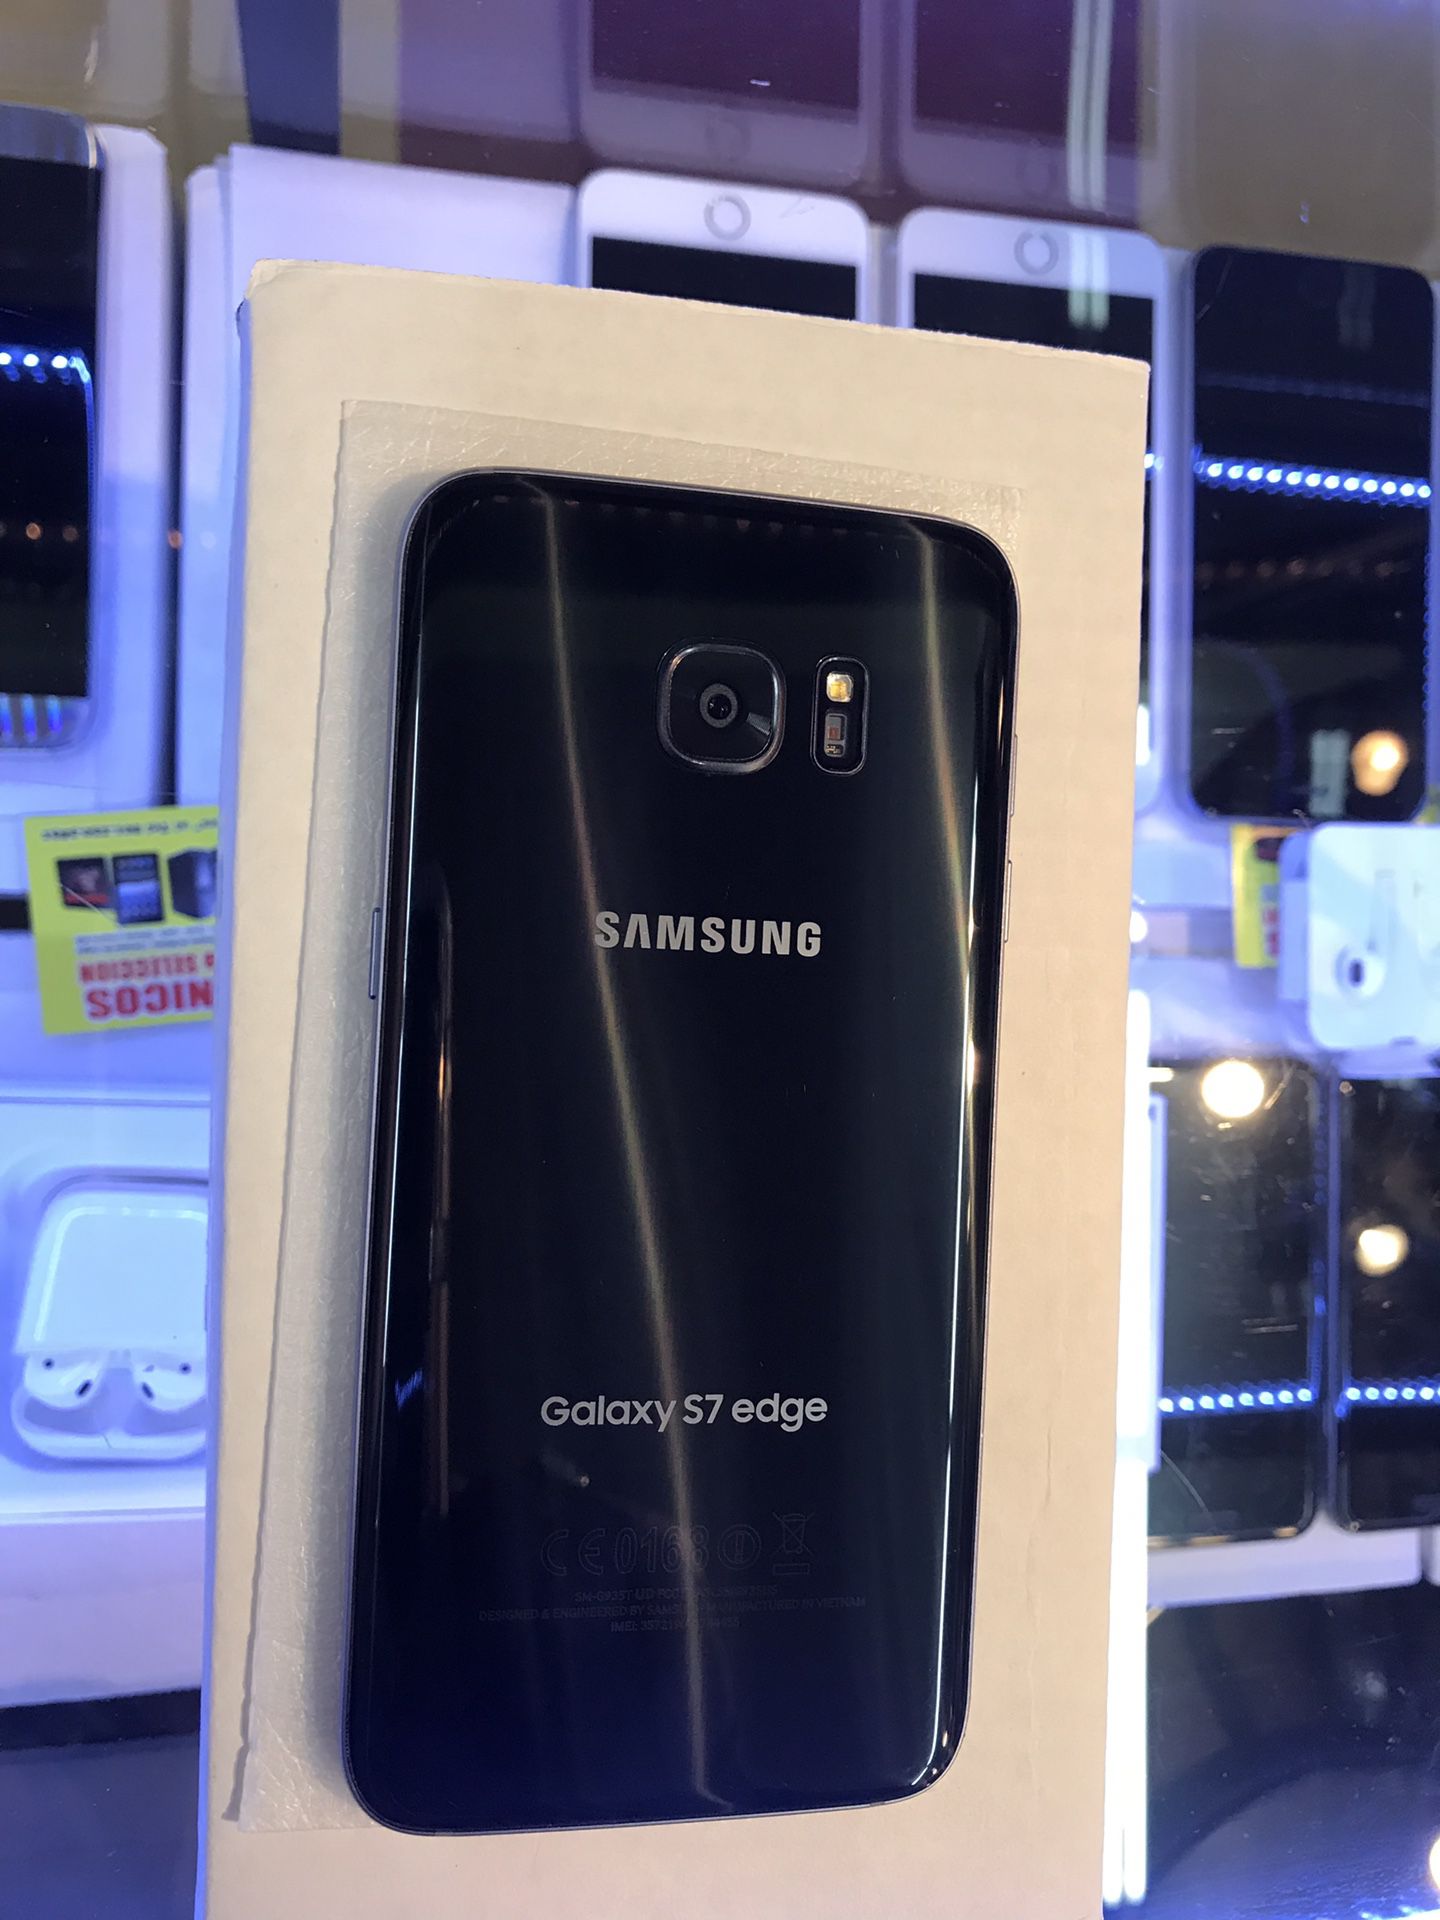 Samsung s7 edge 32gb